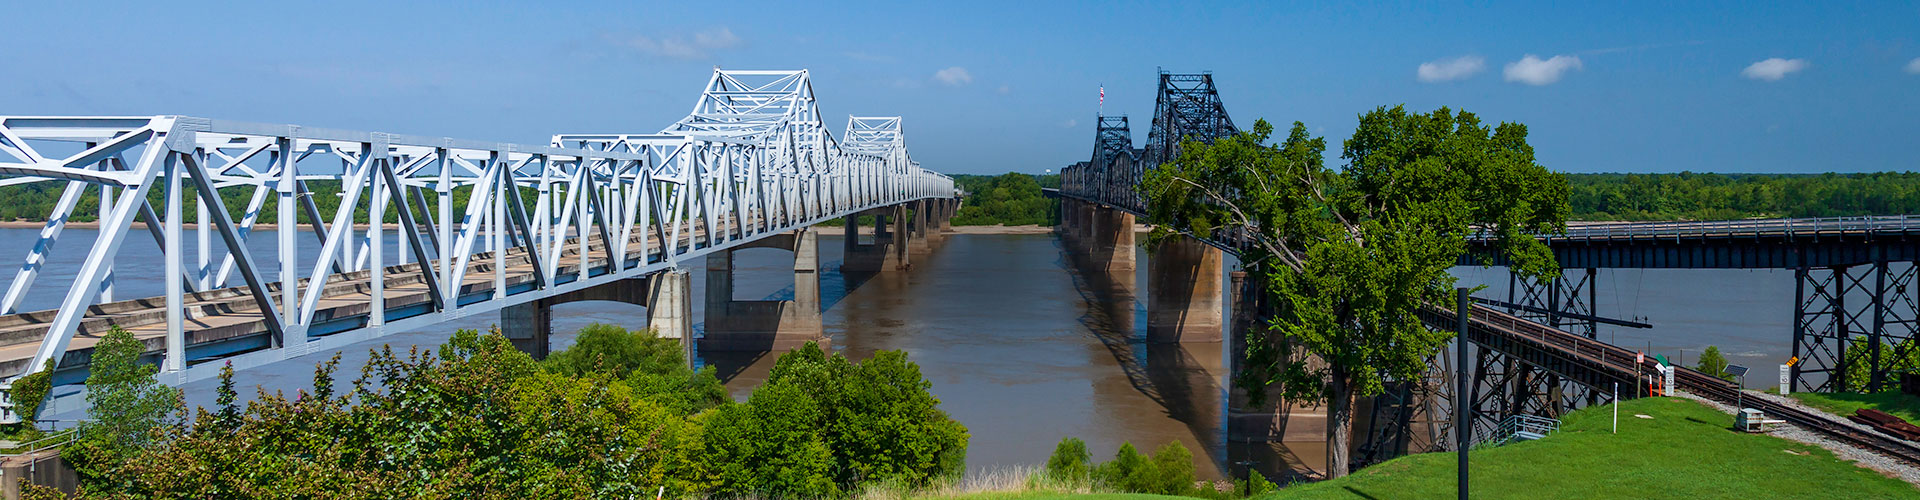 Bridges in the mississippi delta